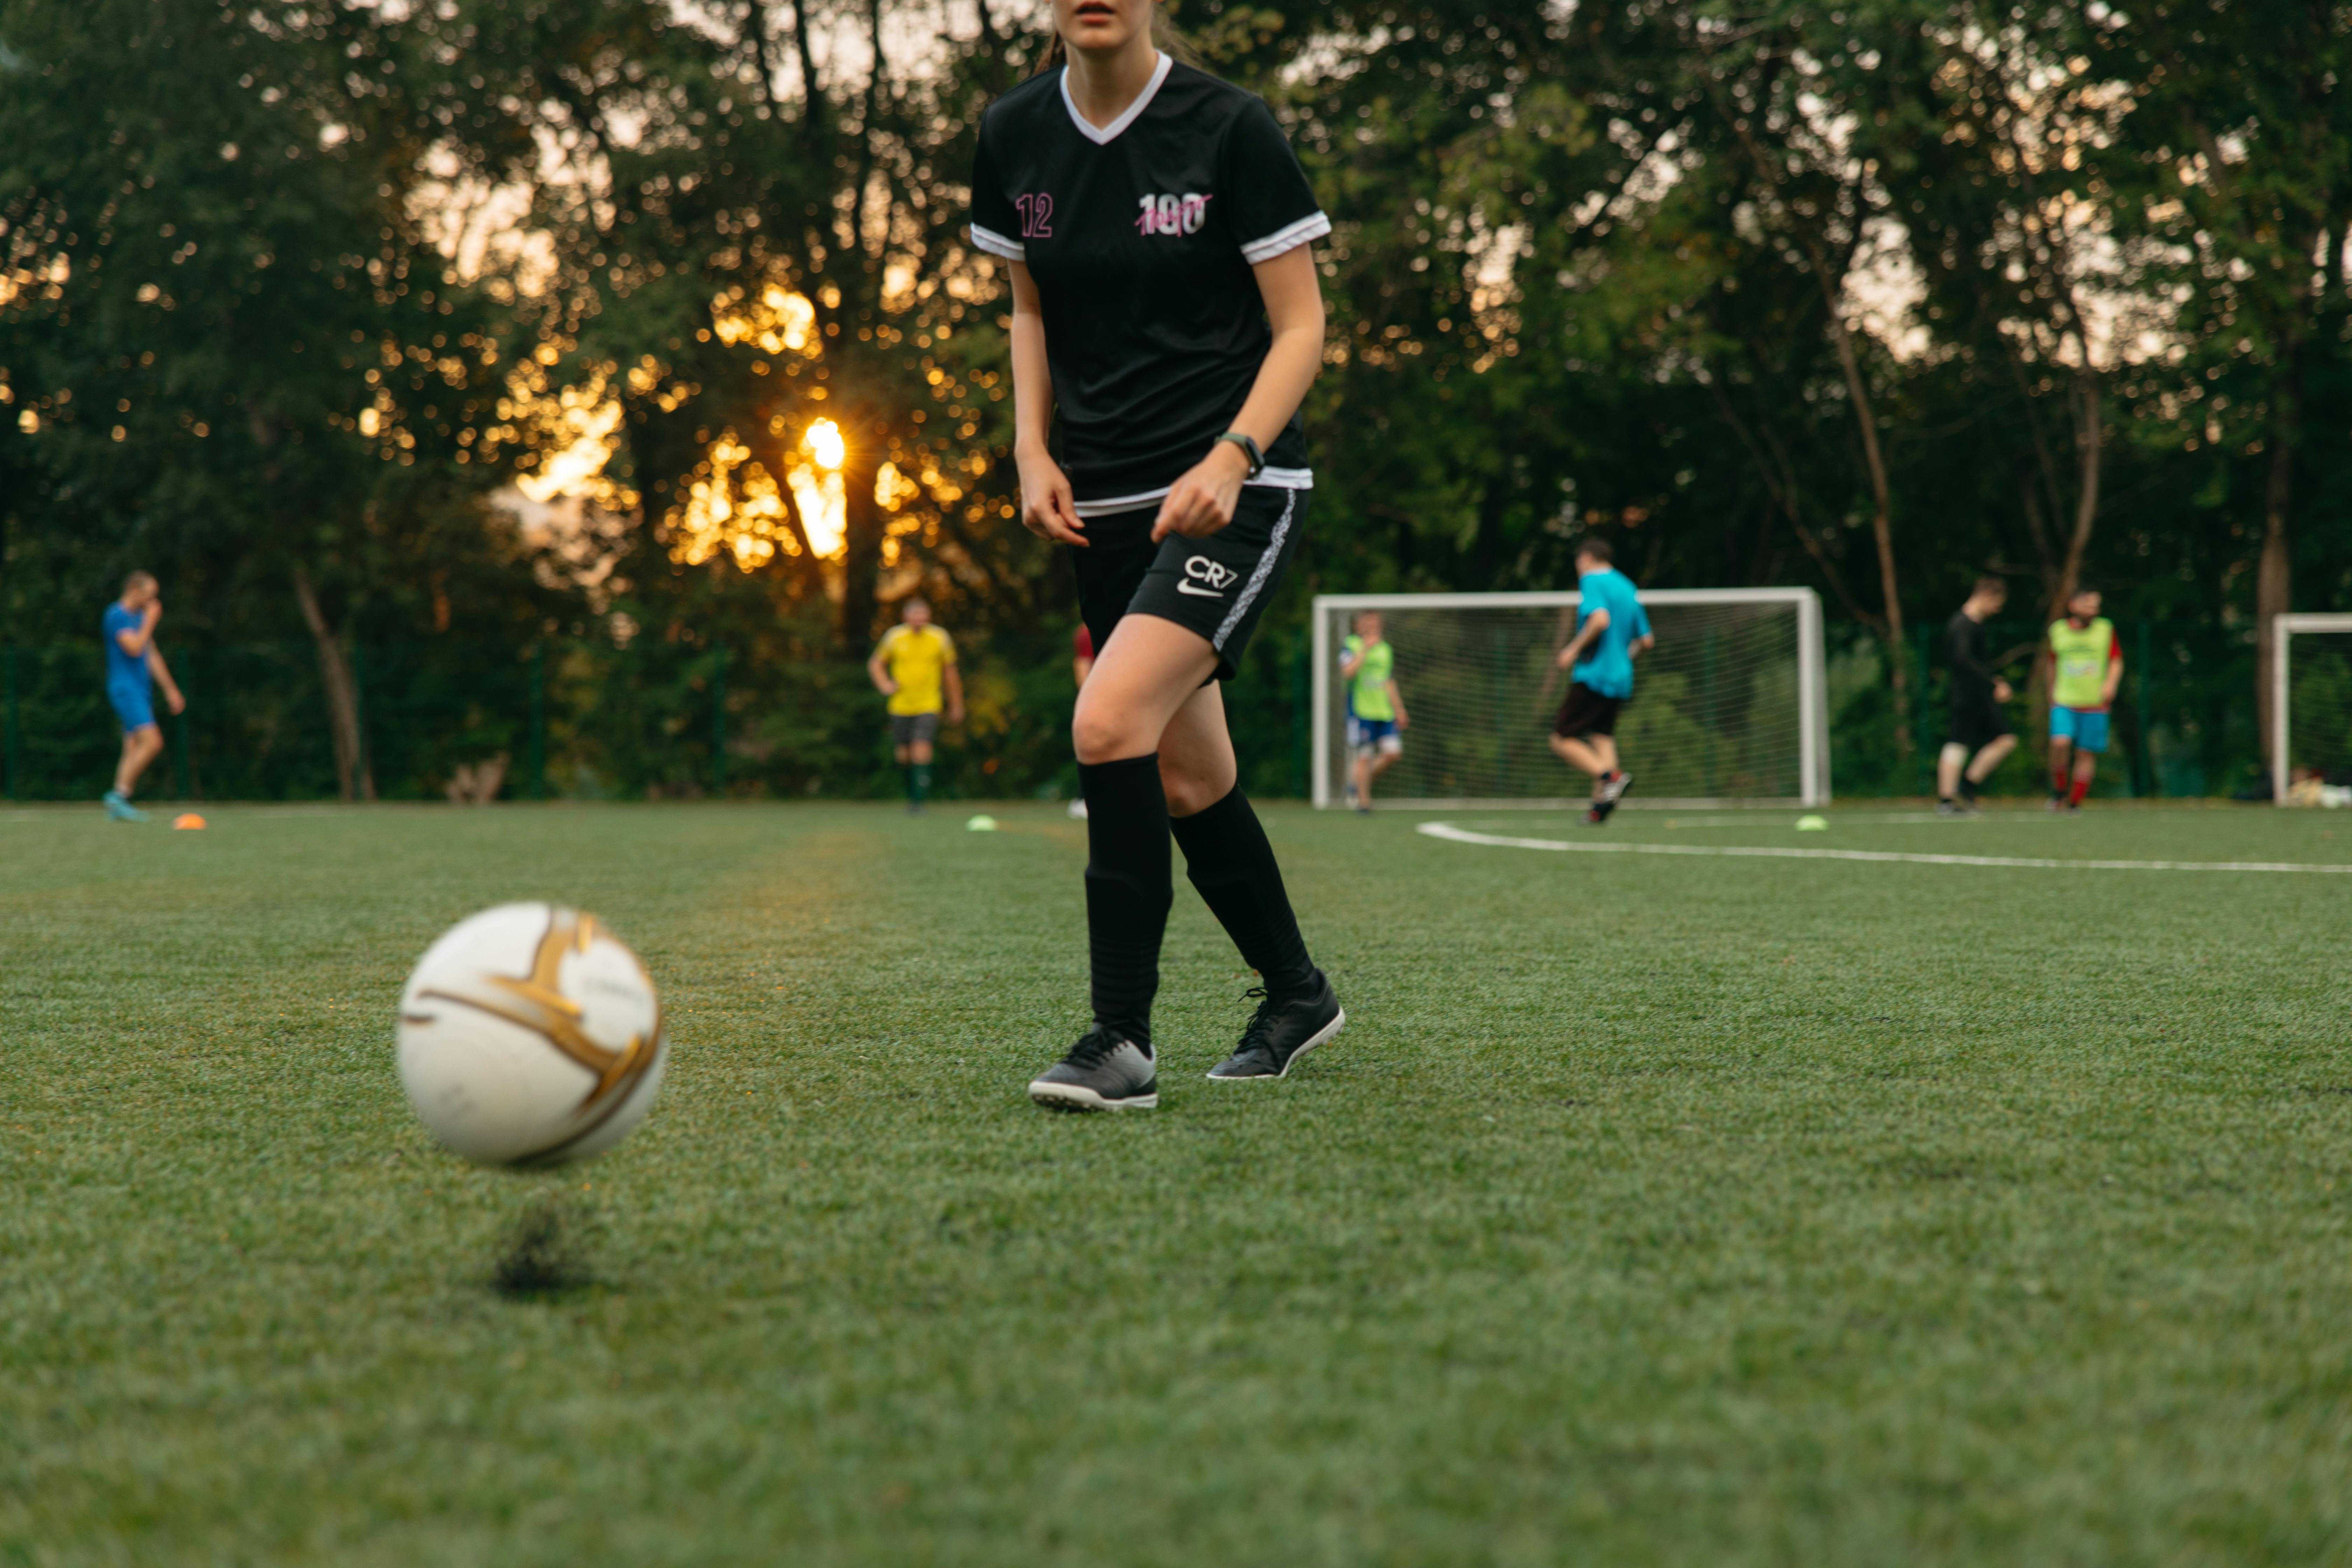 person standing near a soccer ball